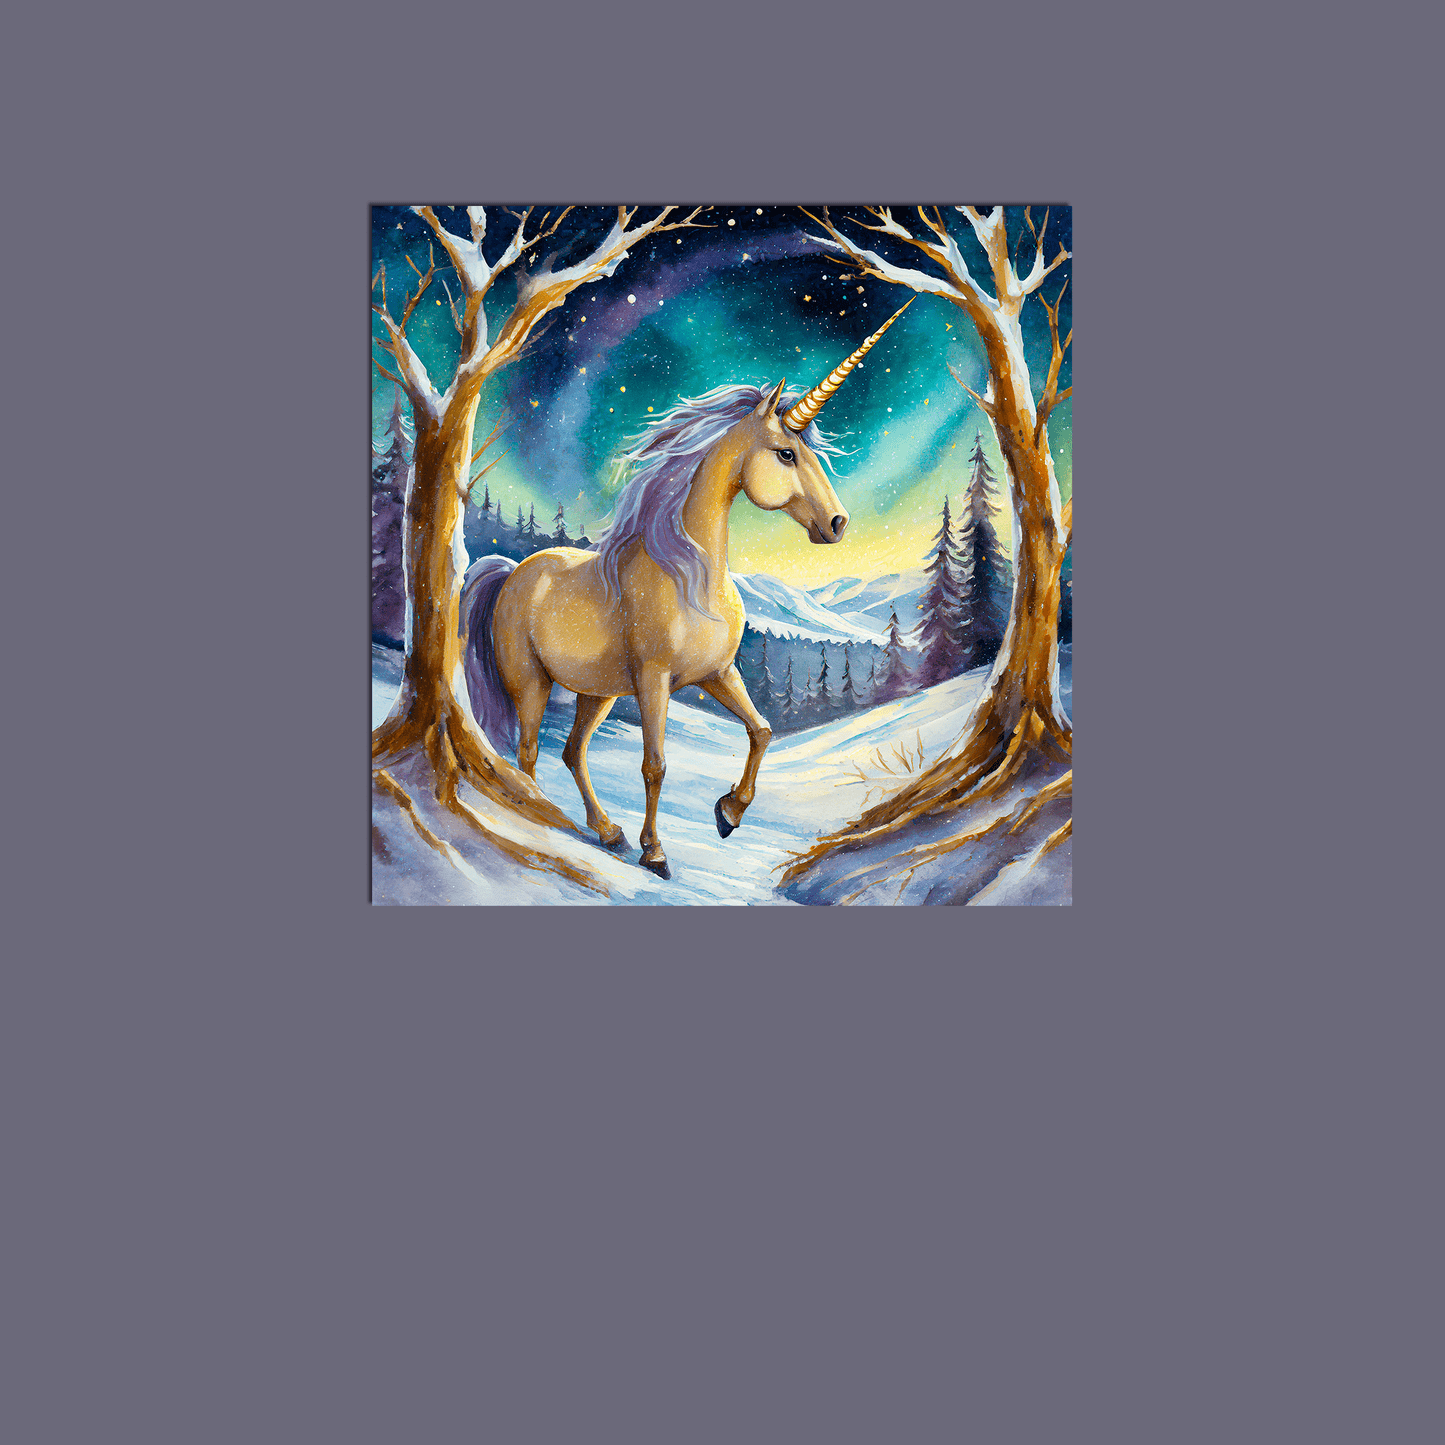 Golden Winter Unicorn - Metal Poster - Premium Metal Poster